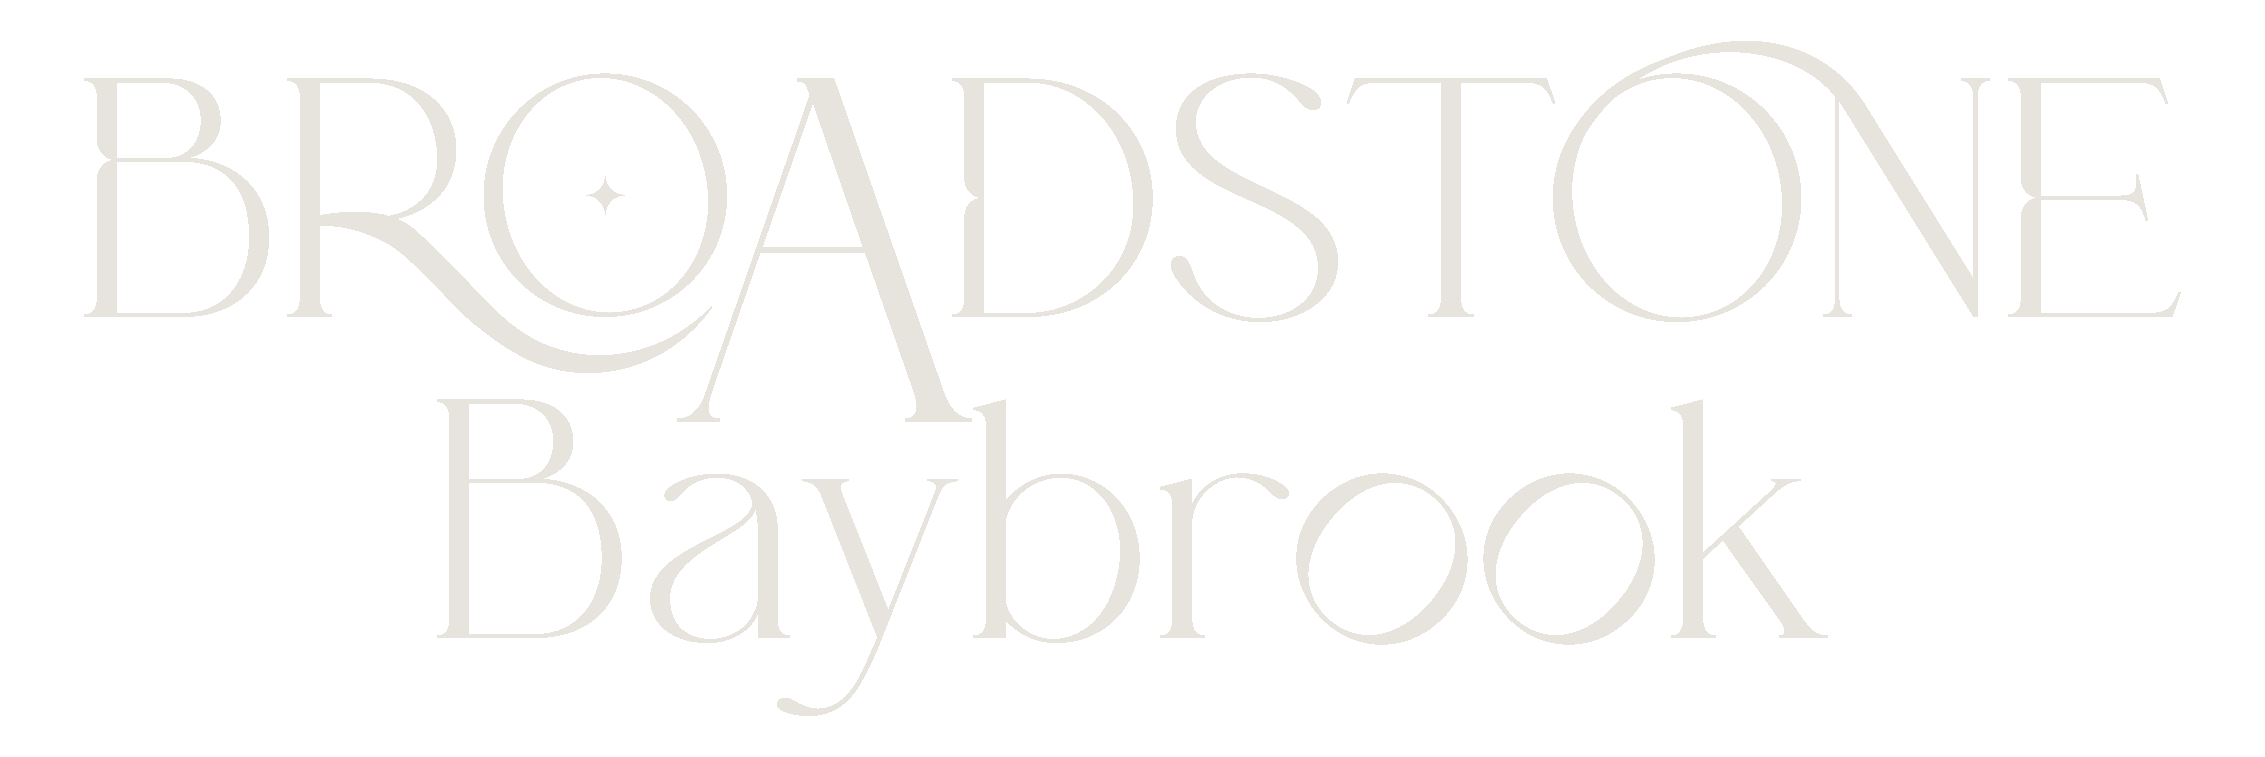 Broadstone Baybrook